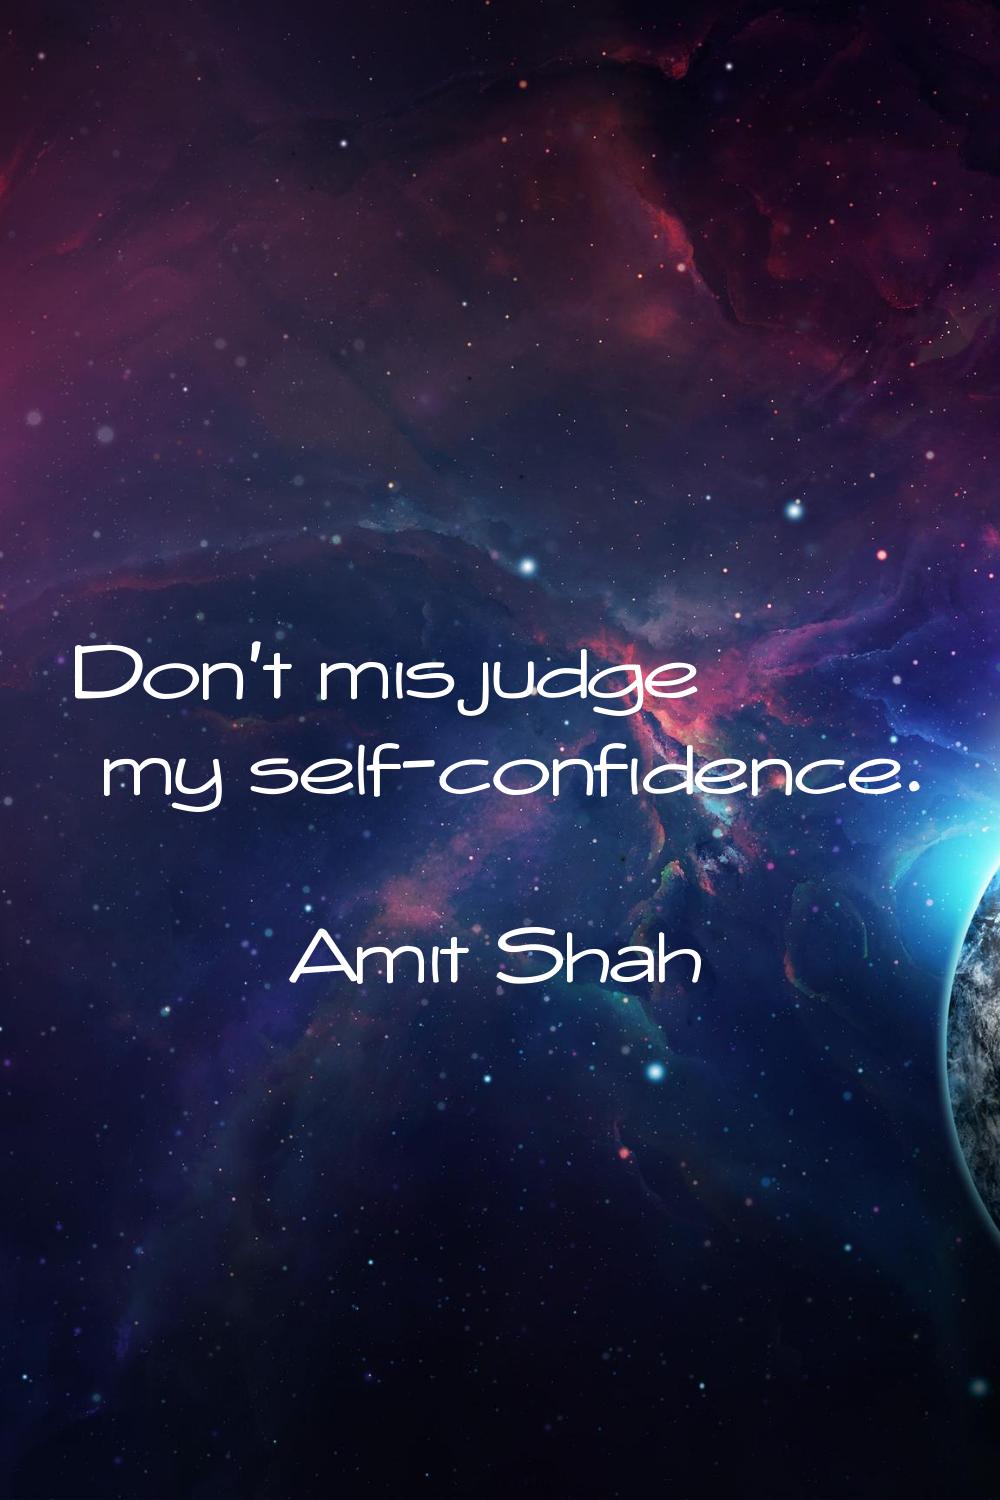 Don't misjudge my self-confidence.